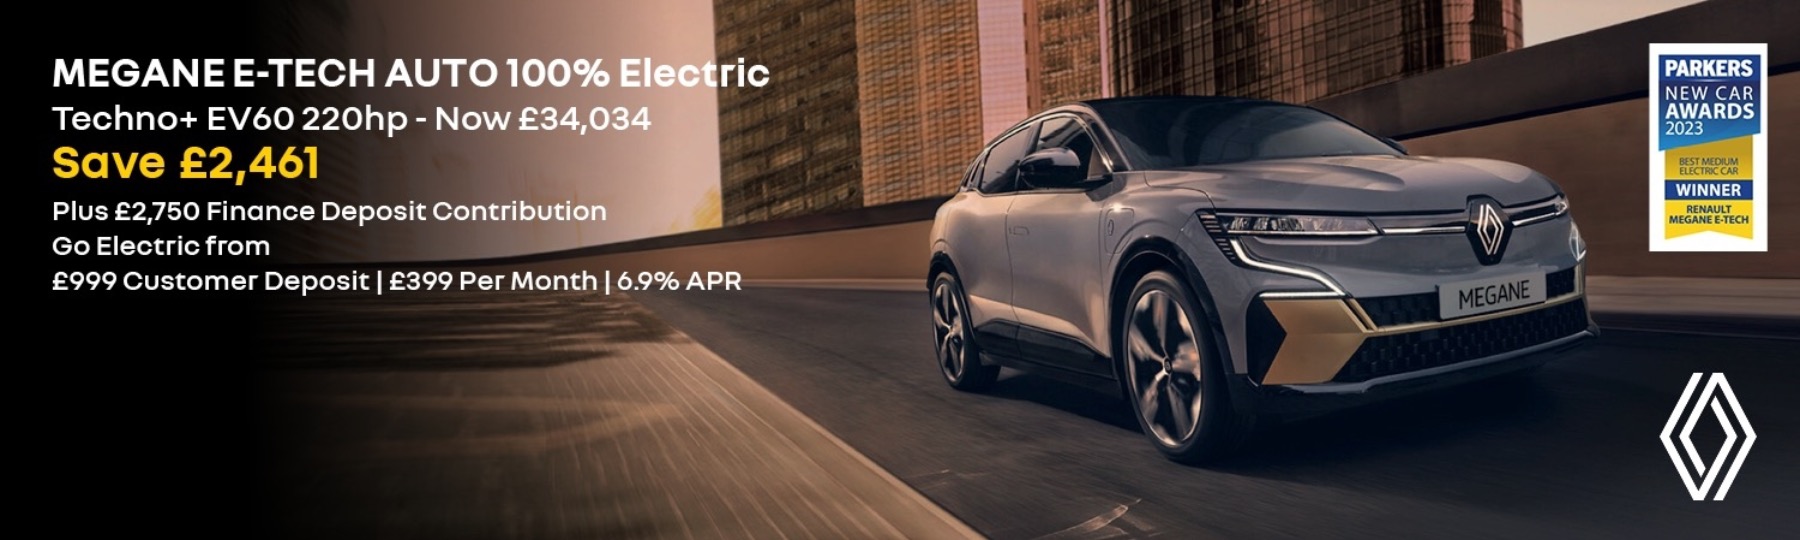 Renault Megane E-Tech 100% electric New Car Offer